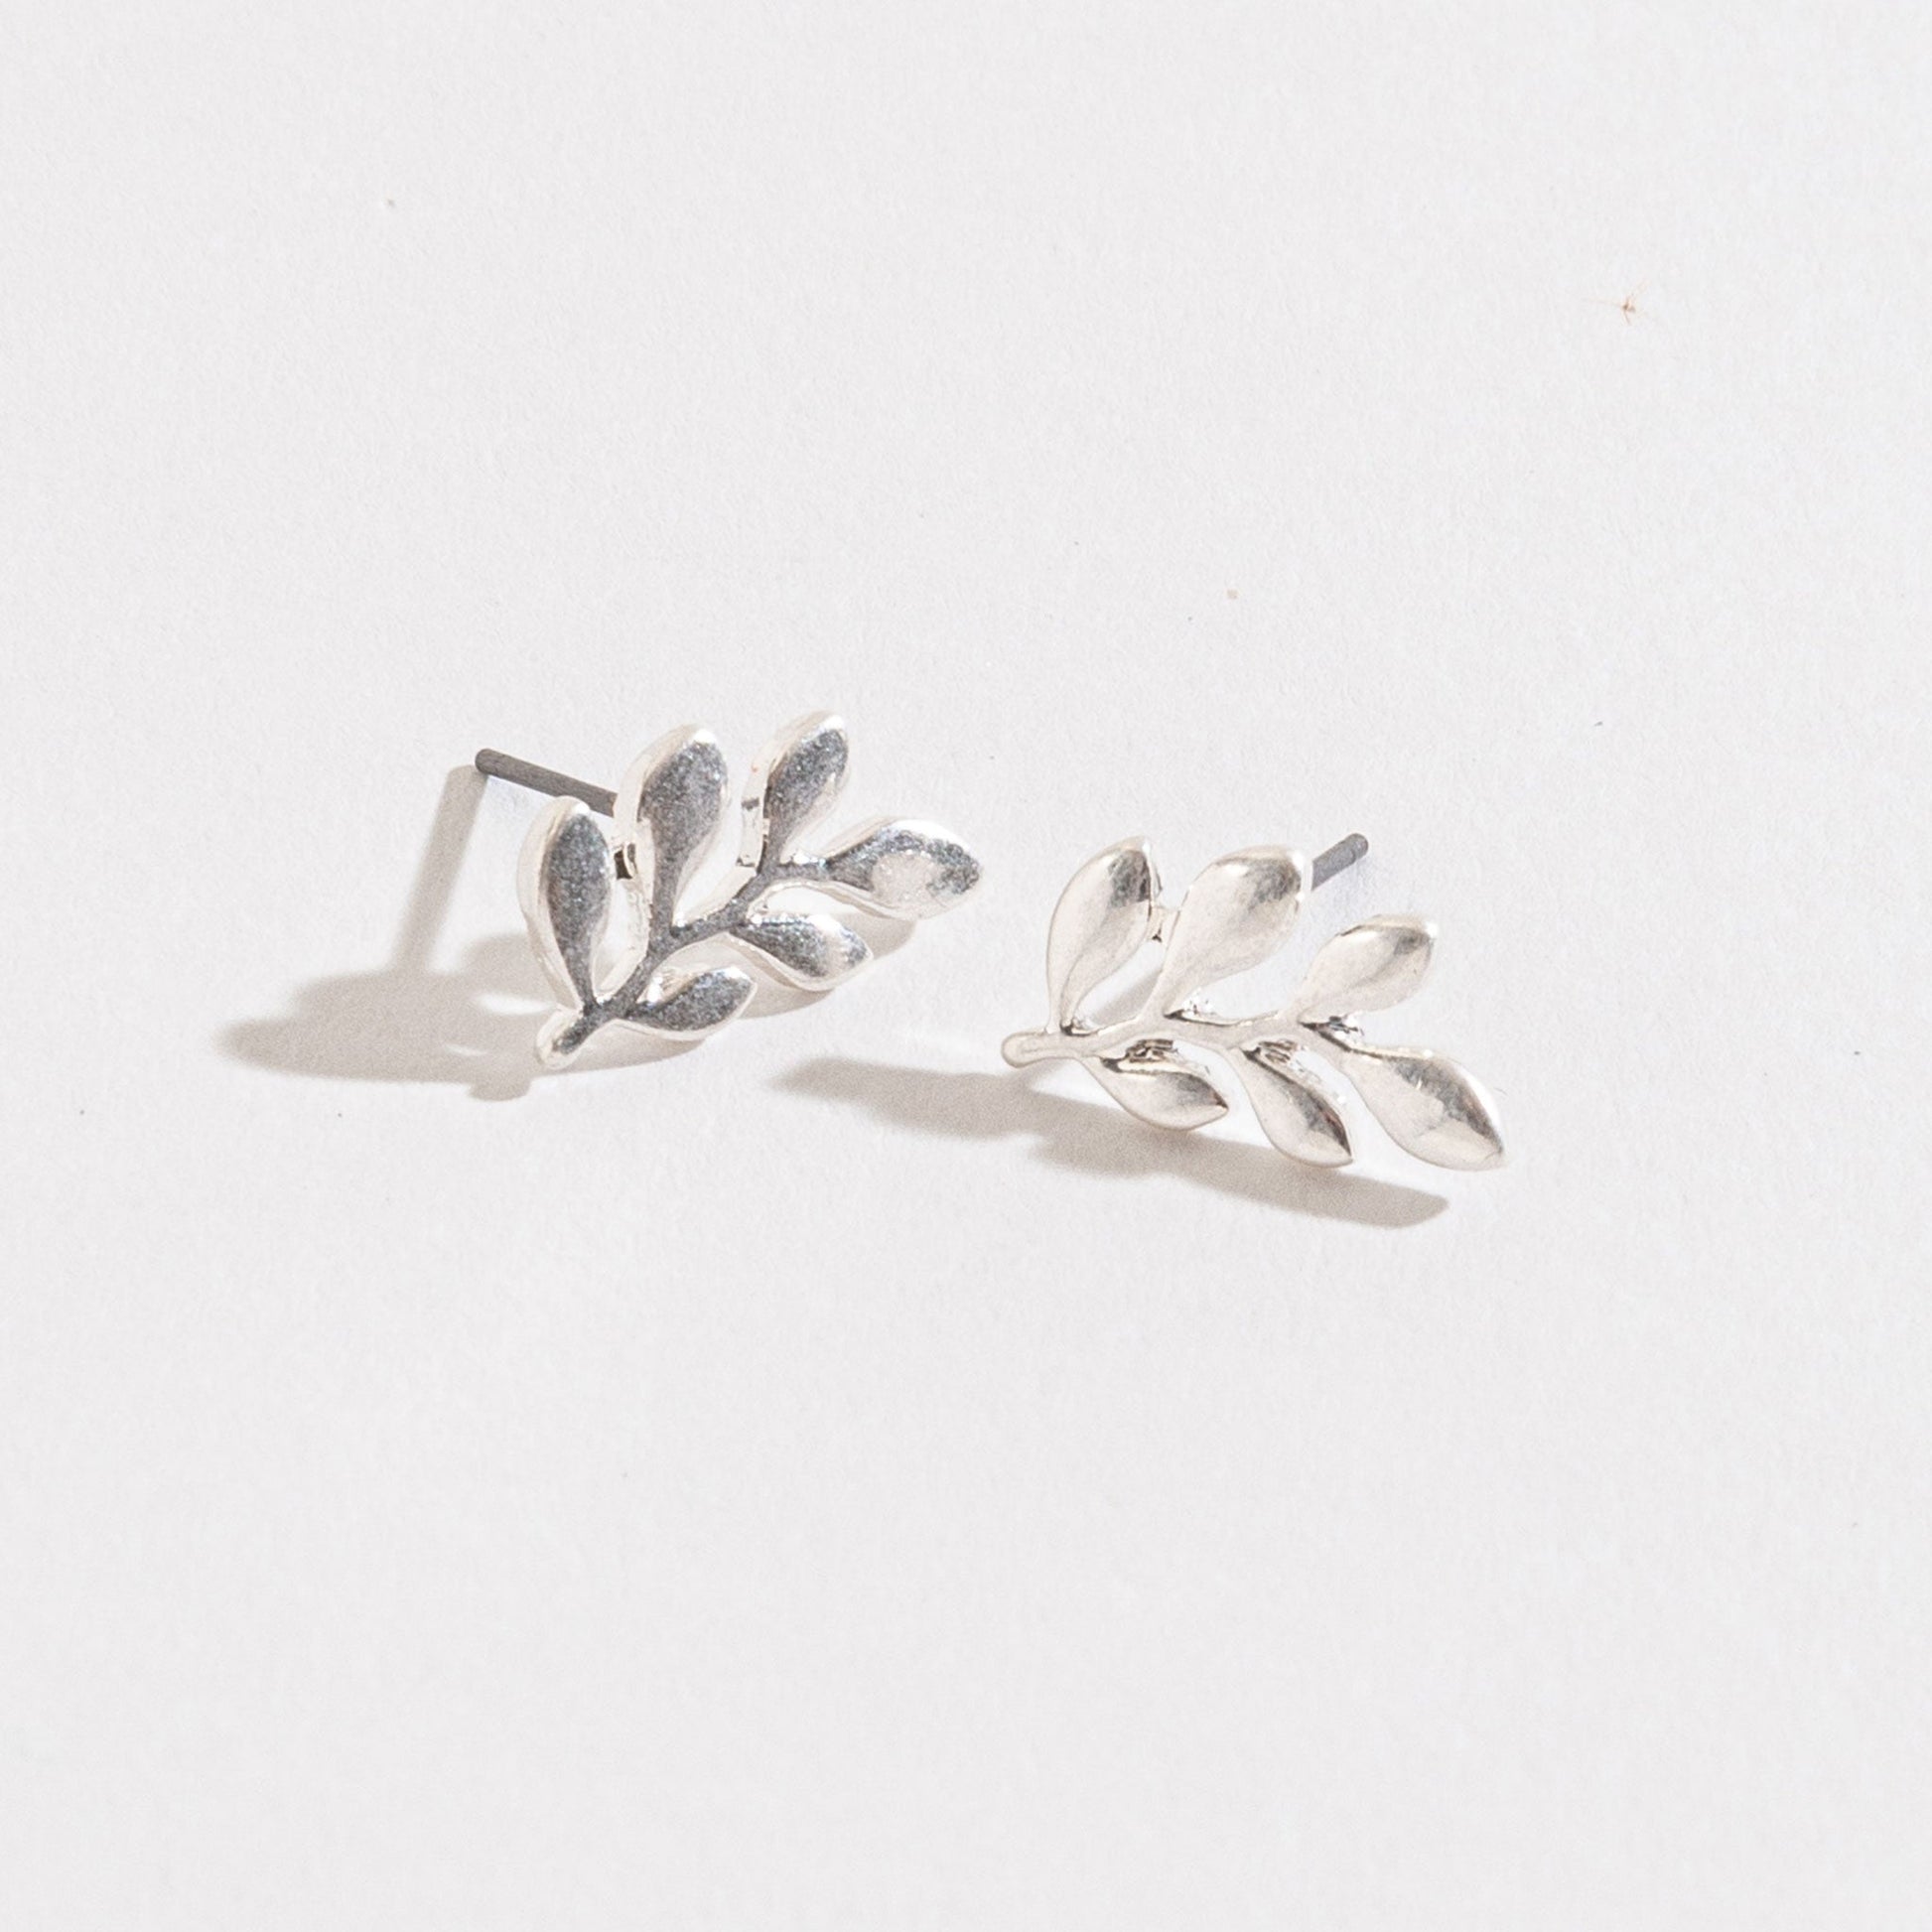 Leaf Stud Buds Earrings